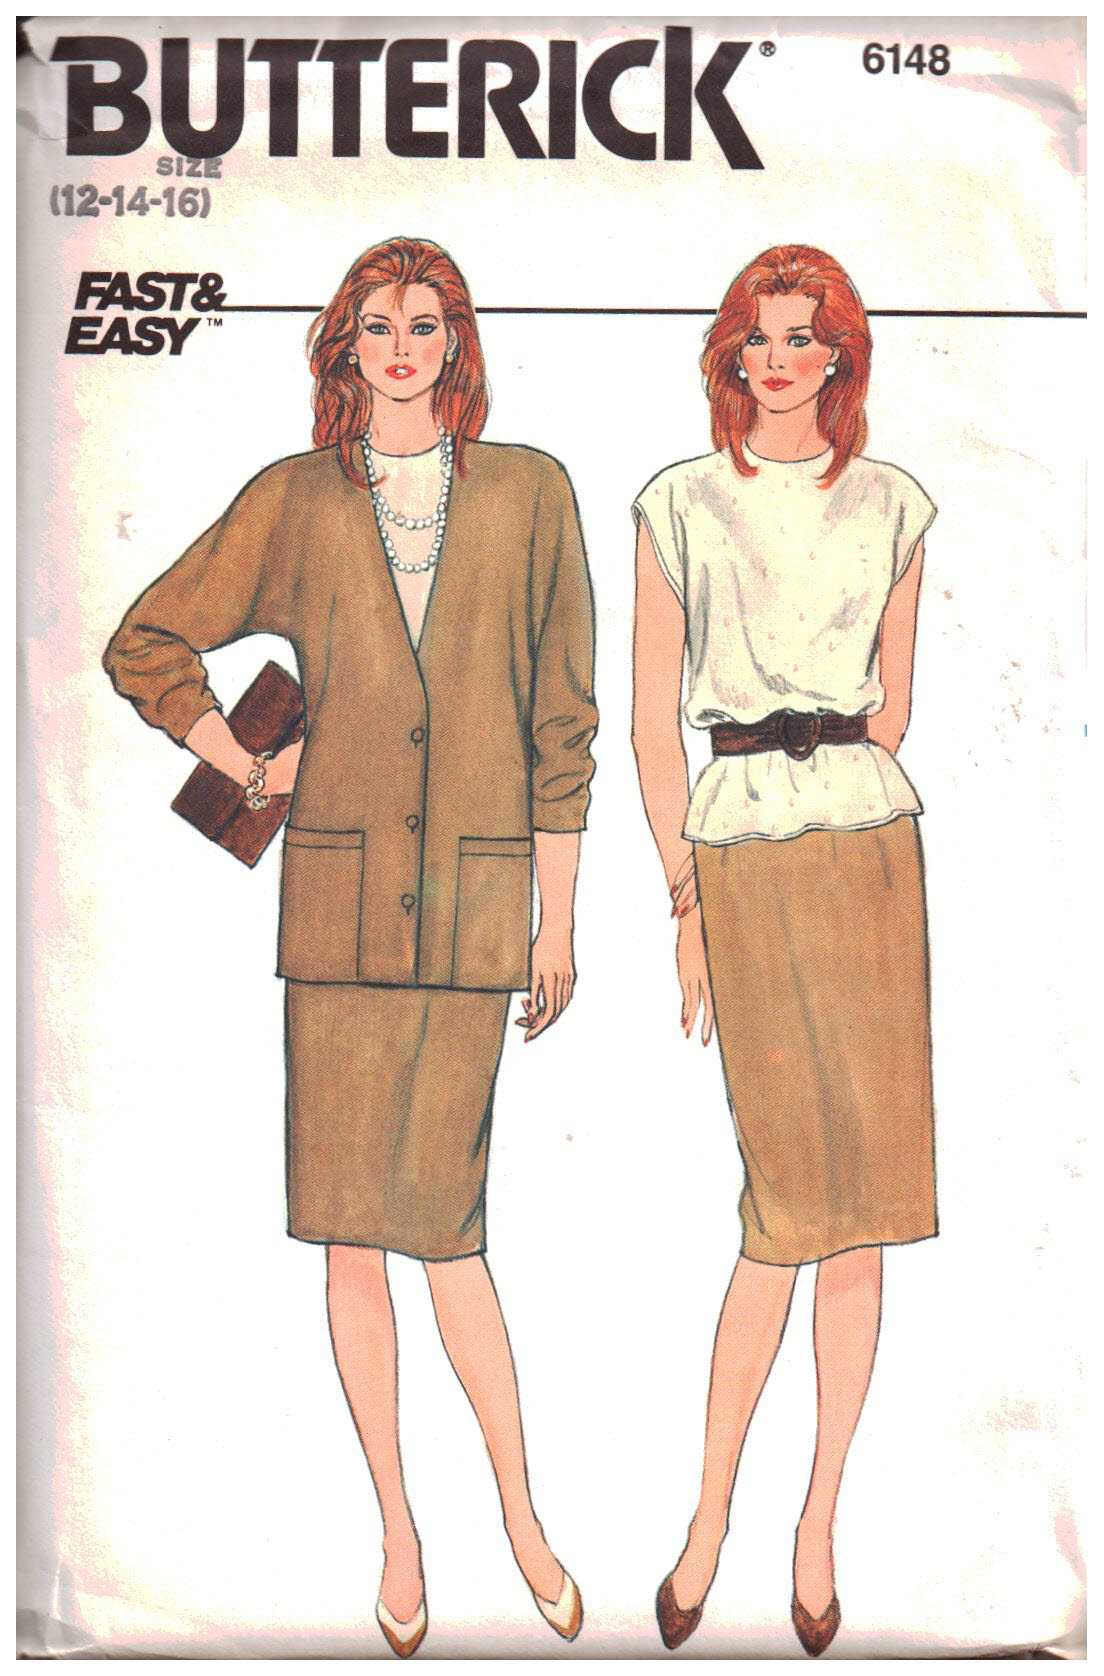 Butterick 6148 Jacket, Skirt, Top Size: 12-14-16 Uncut Sewing Pattern